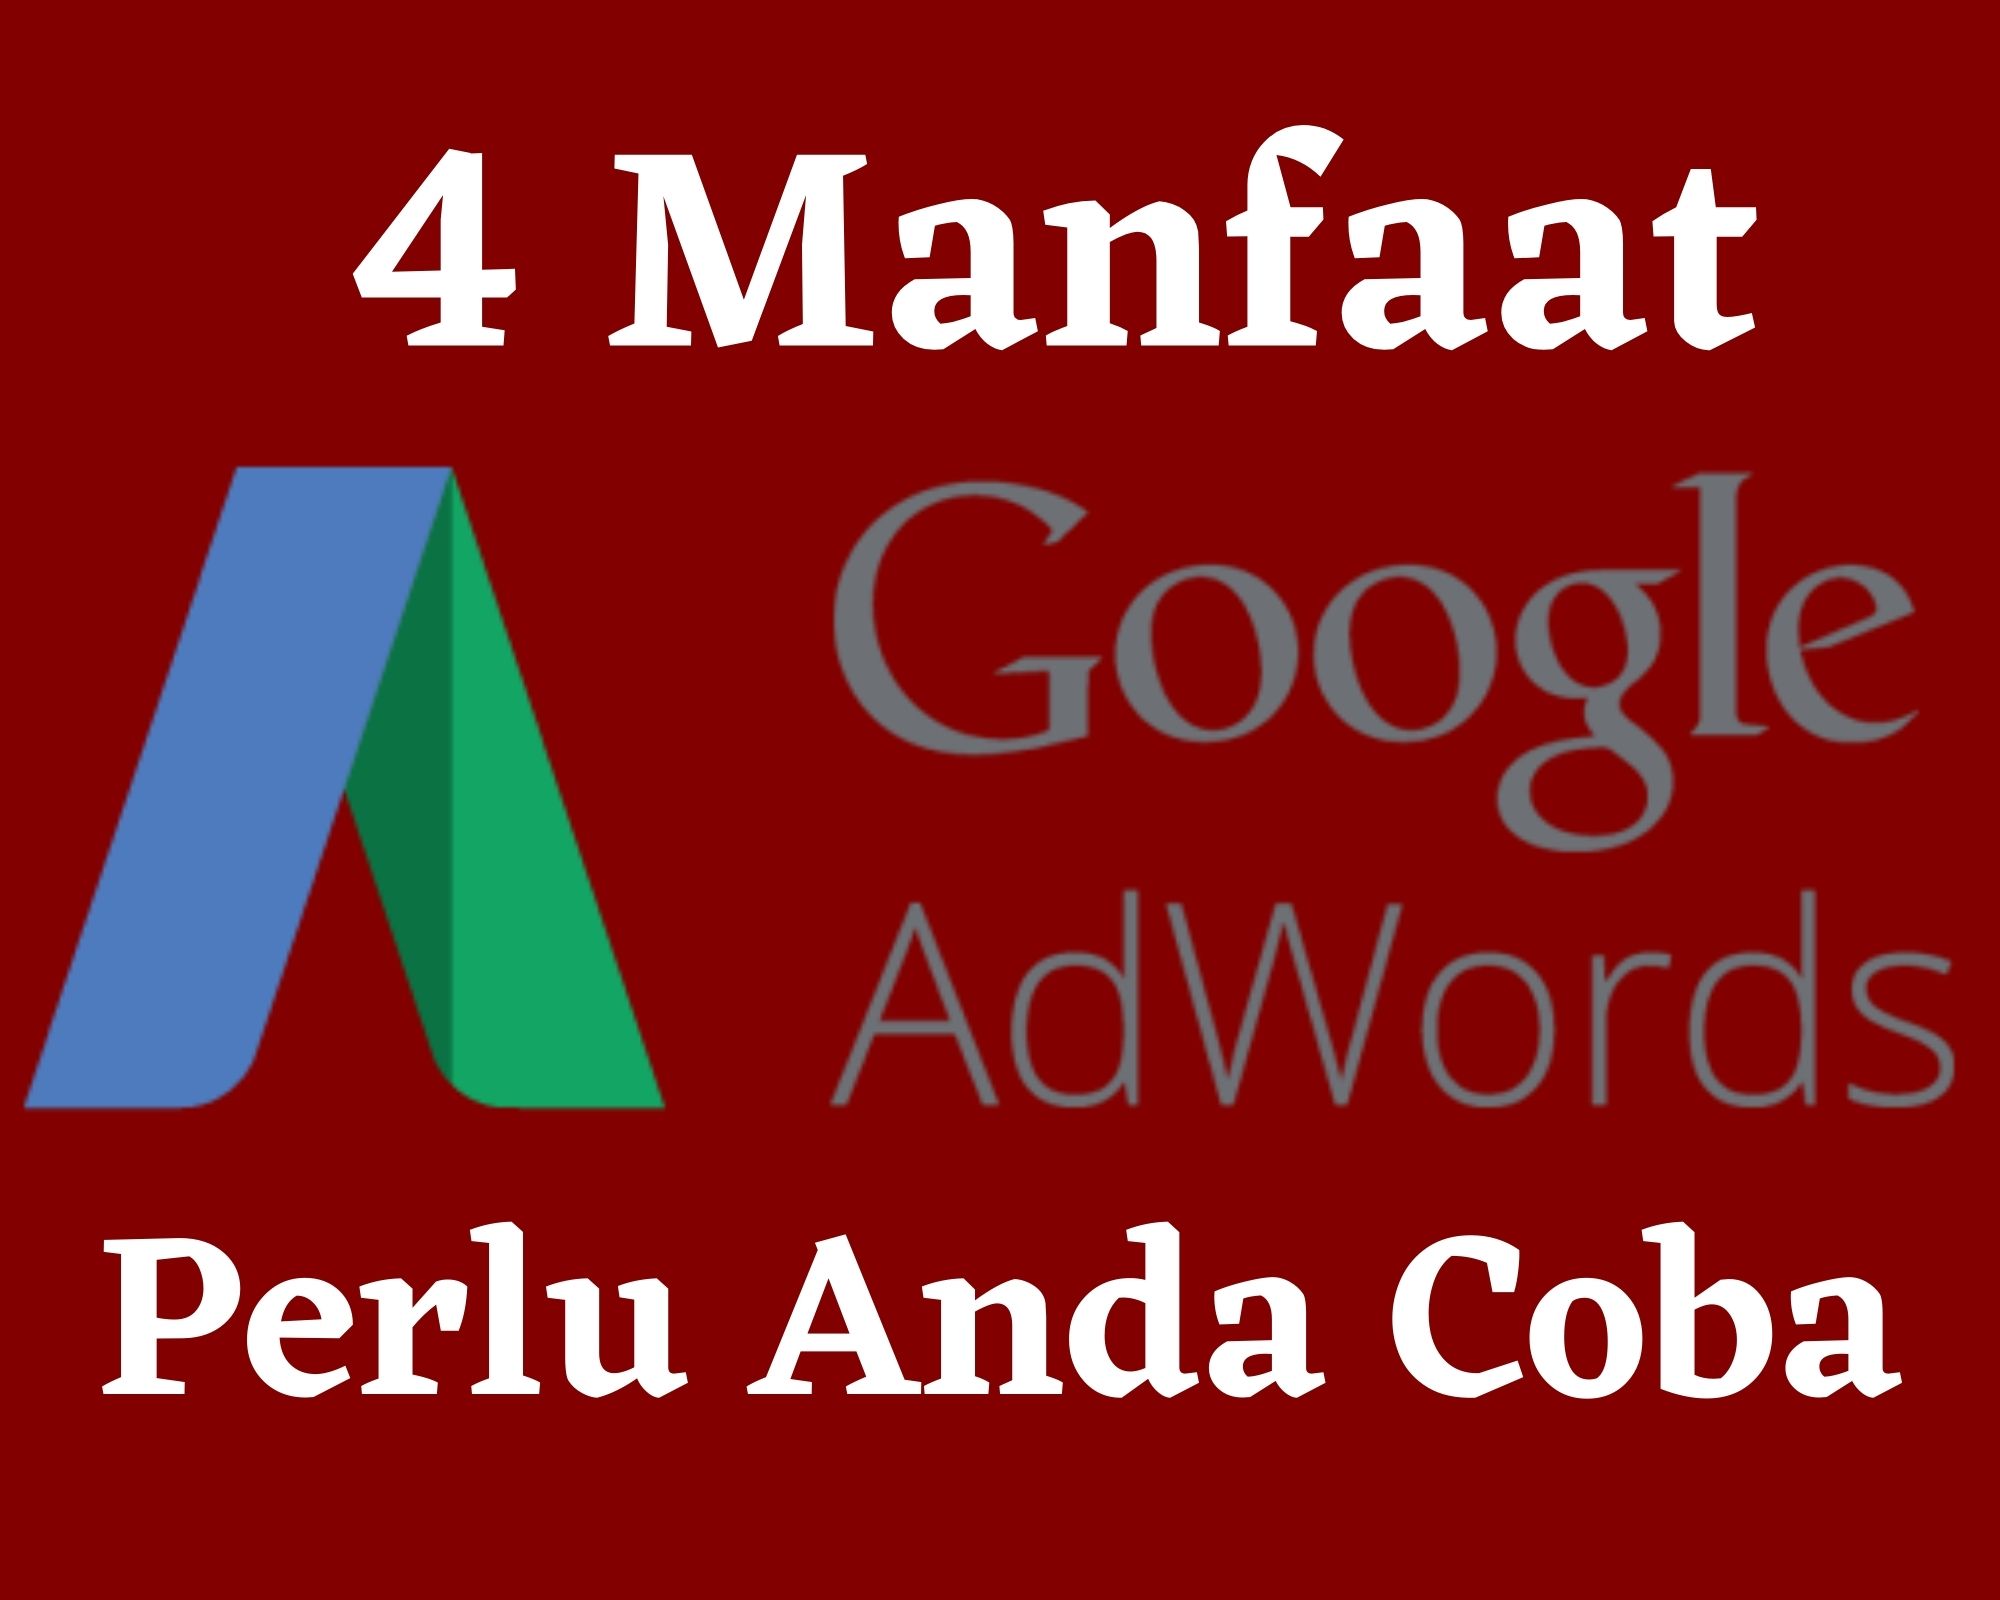 4 Manfaat Google Adwords, No 1 Bikin Produk Anda Dikenal Luas